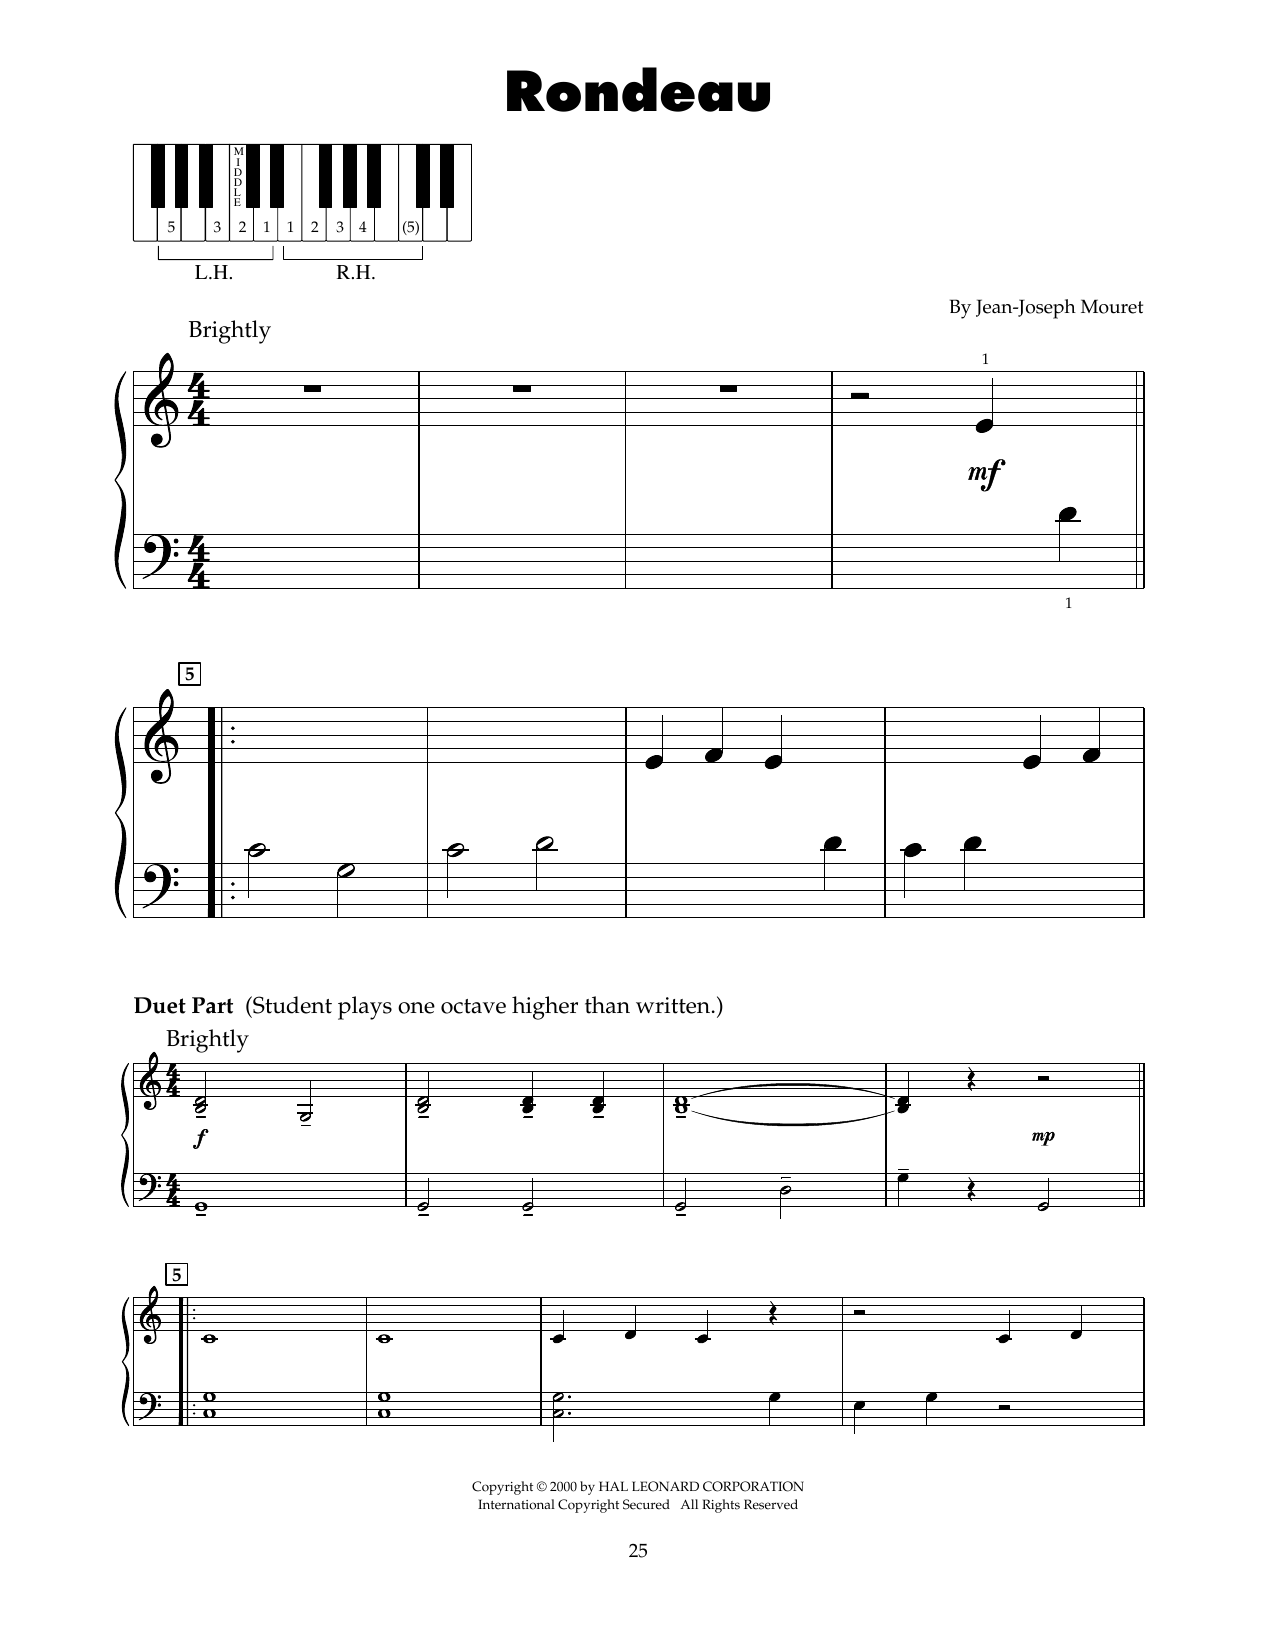 Jean-Joseph Mouret Fanfare Rondeau (arr. Carol Klose) Sheet Music Notes & Chords for 5-Finger Piano - Download or Print PDF